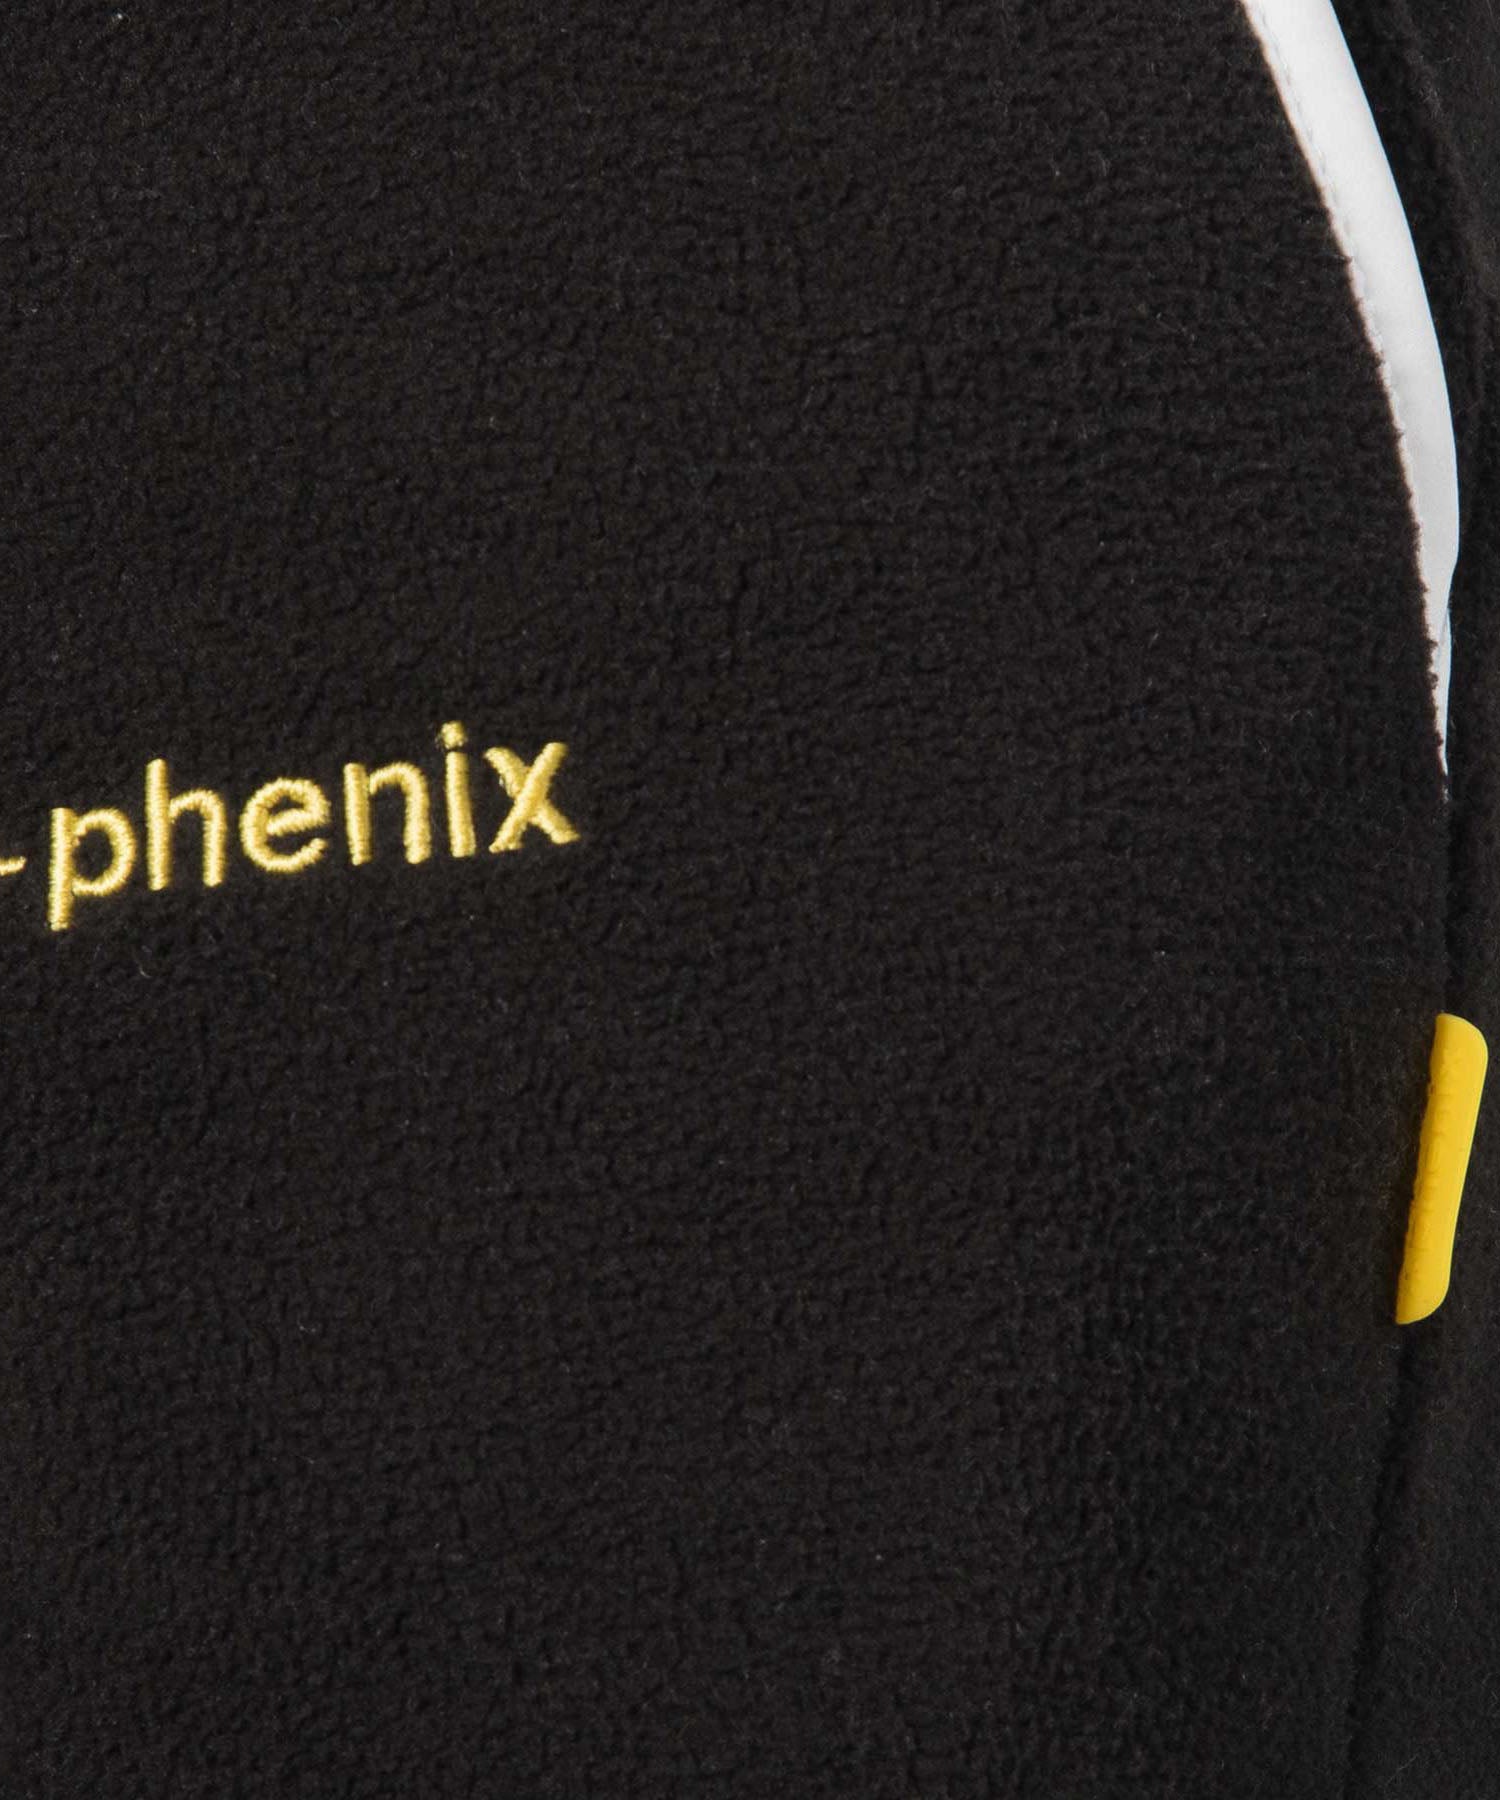 【WOMENS】ロングパンツ Fleece Pants テックウェア アーバンアウトドア 高機能ウェア +phenix(プラスフェニックス)